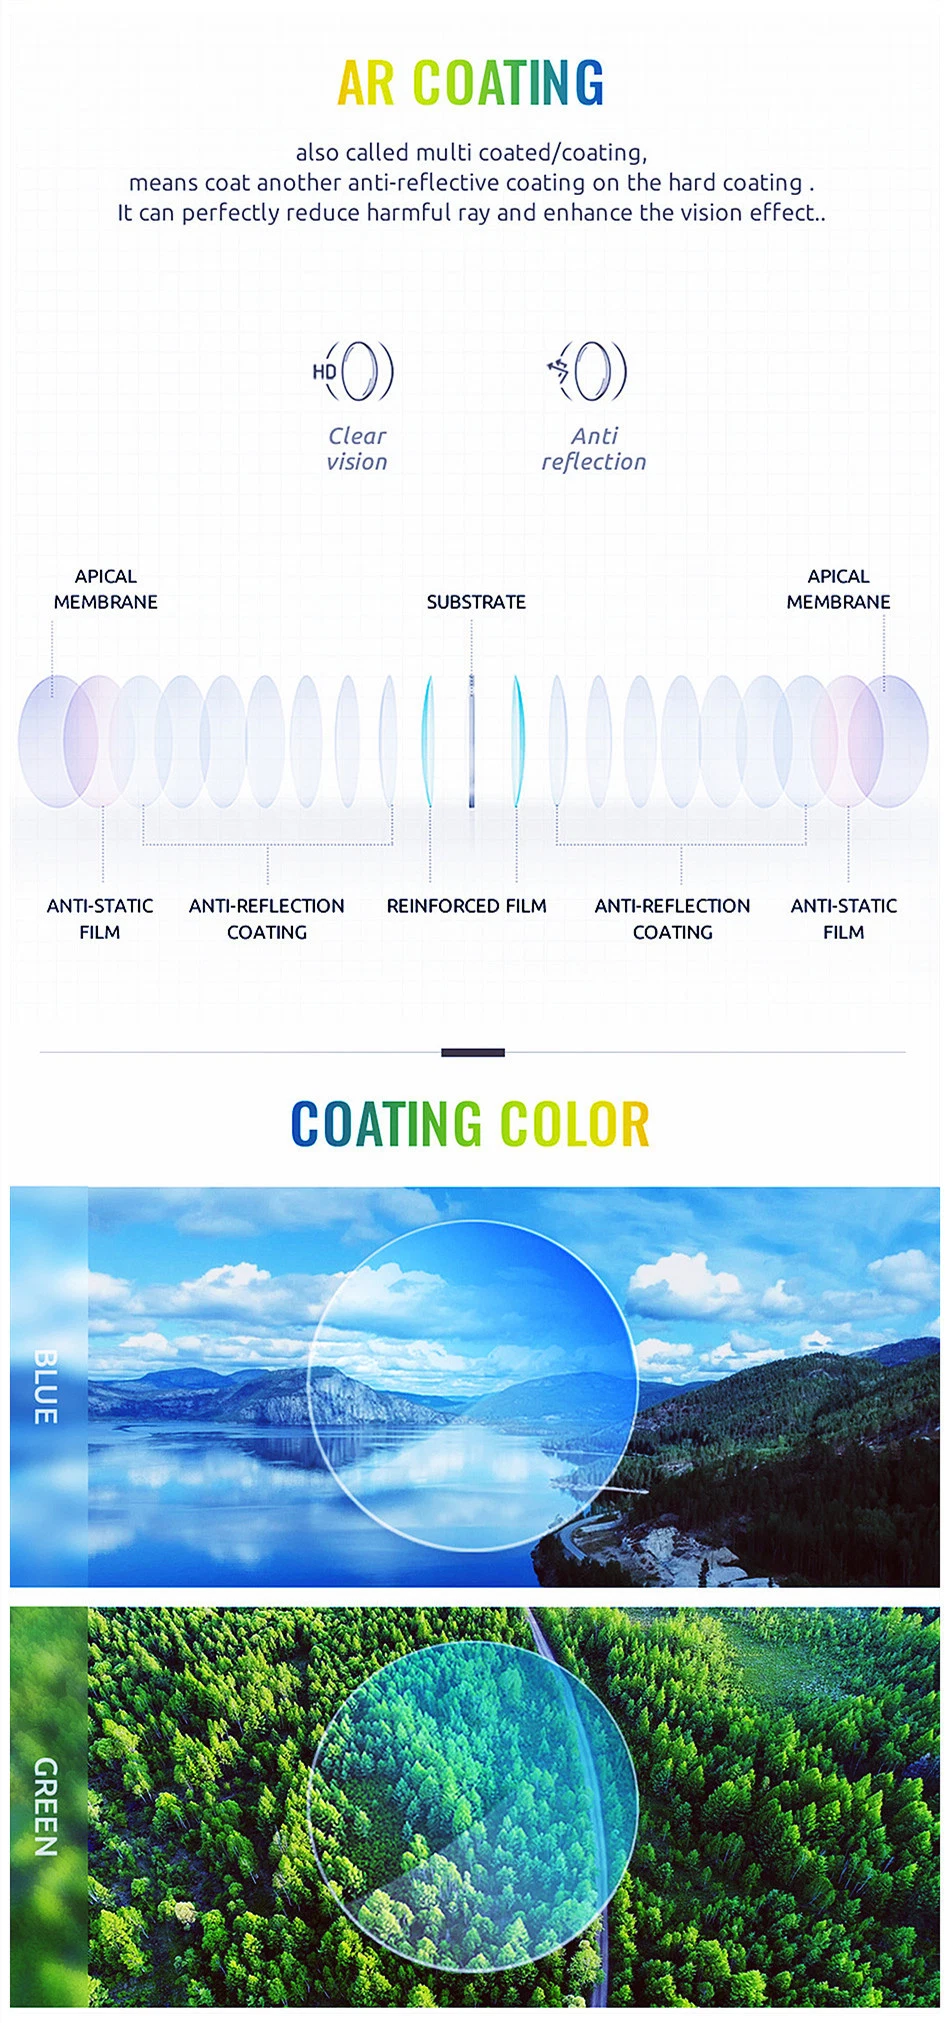 Anti-Blue Block Light UV420 Spin Photochromic Progressive 1.56 Blue Cut Single Vision Stock Lenses